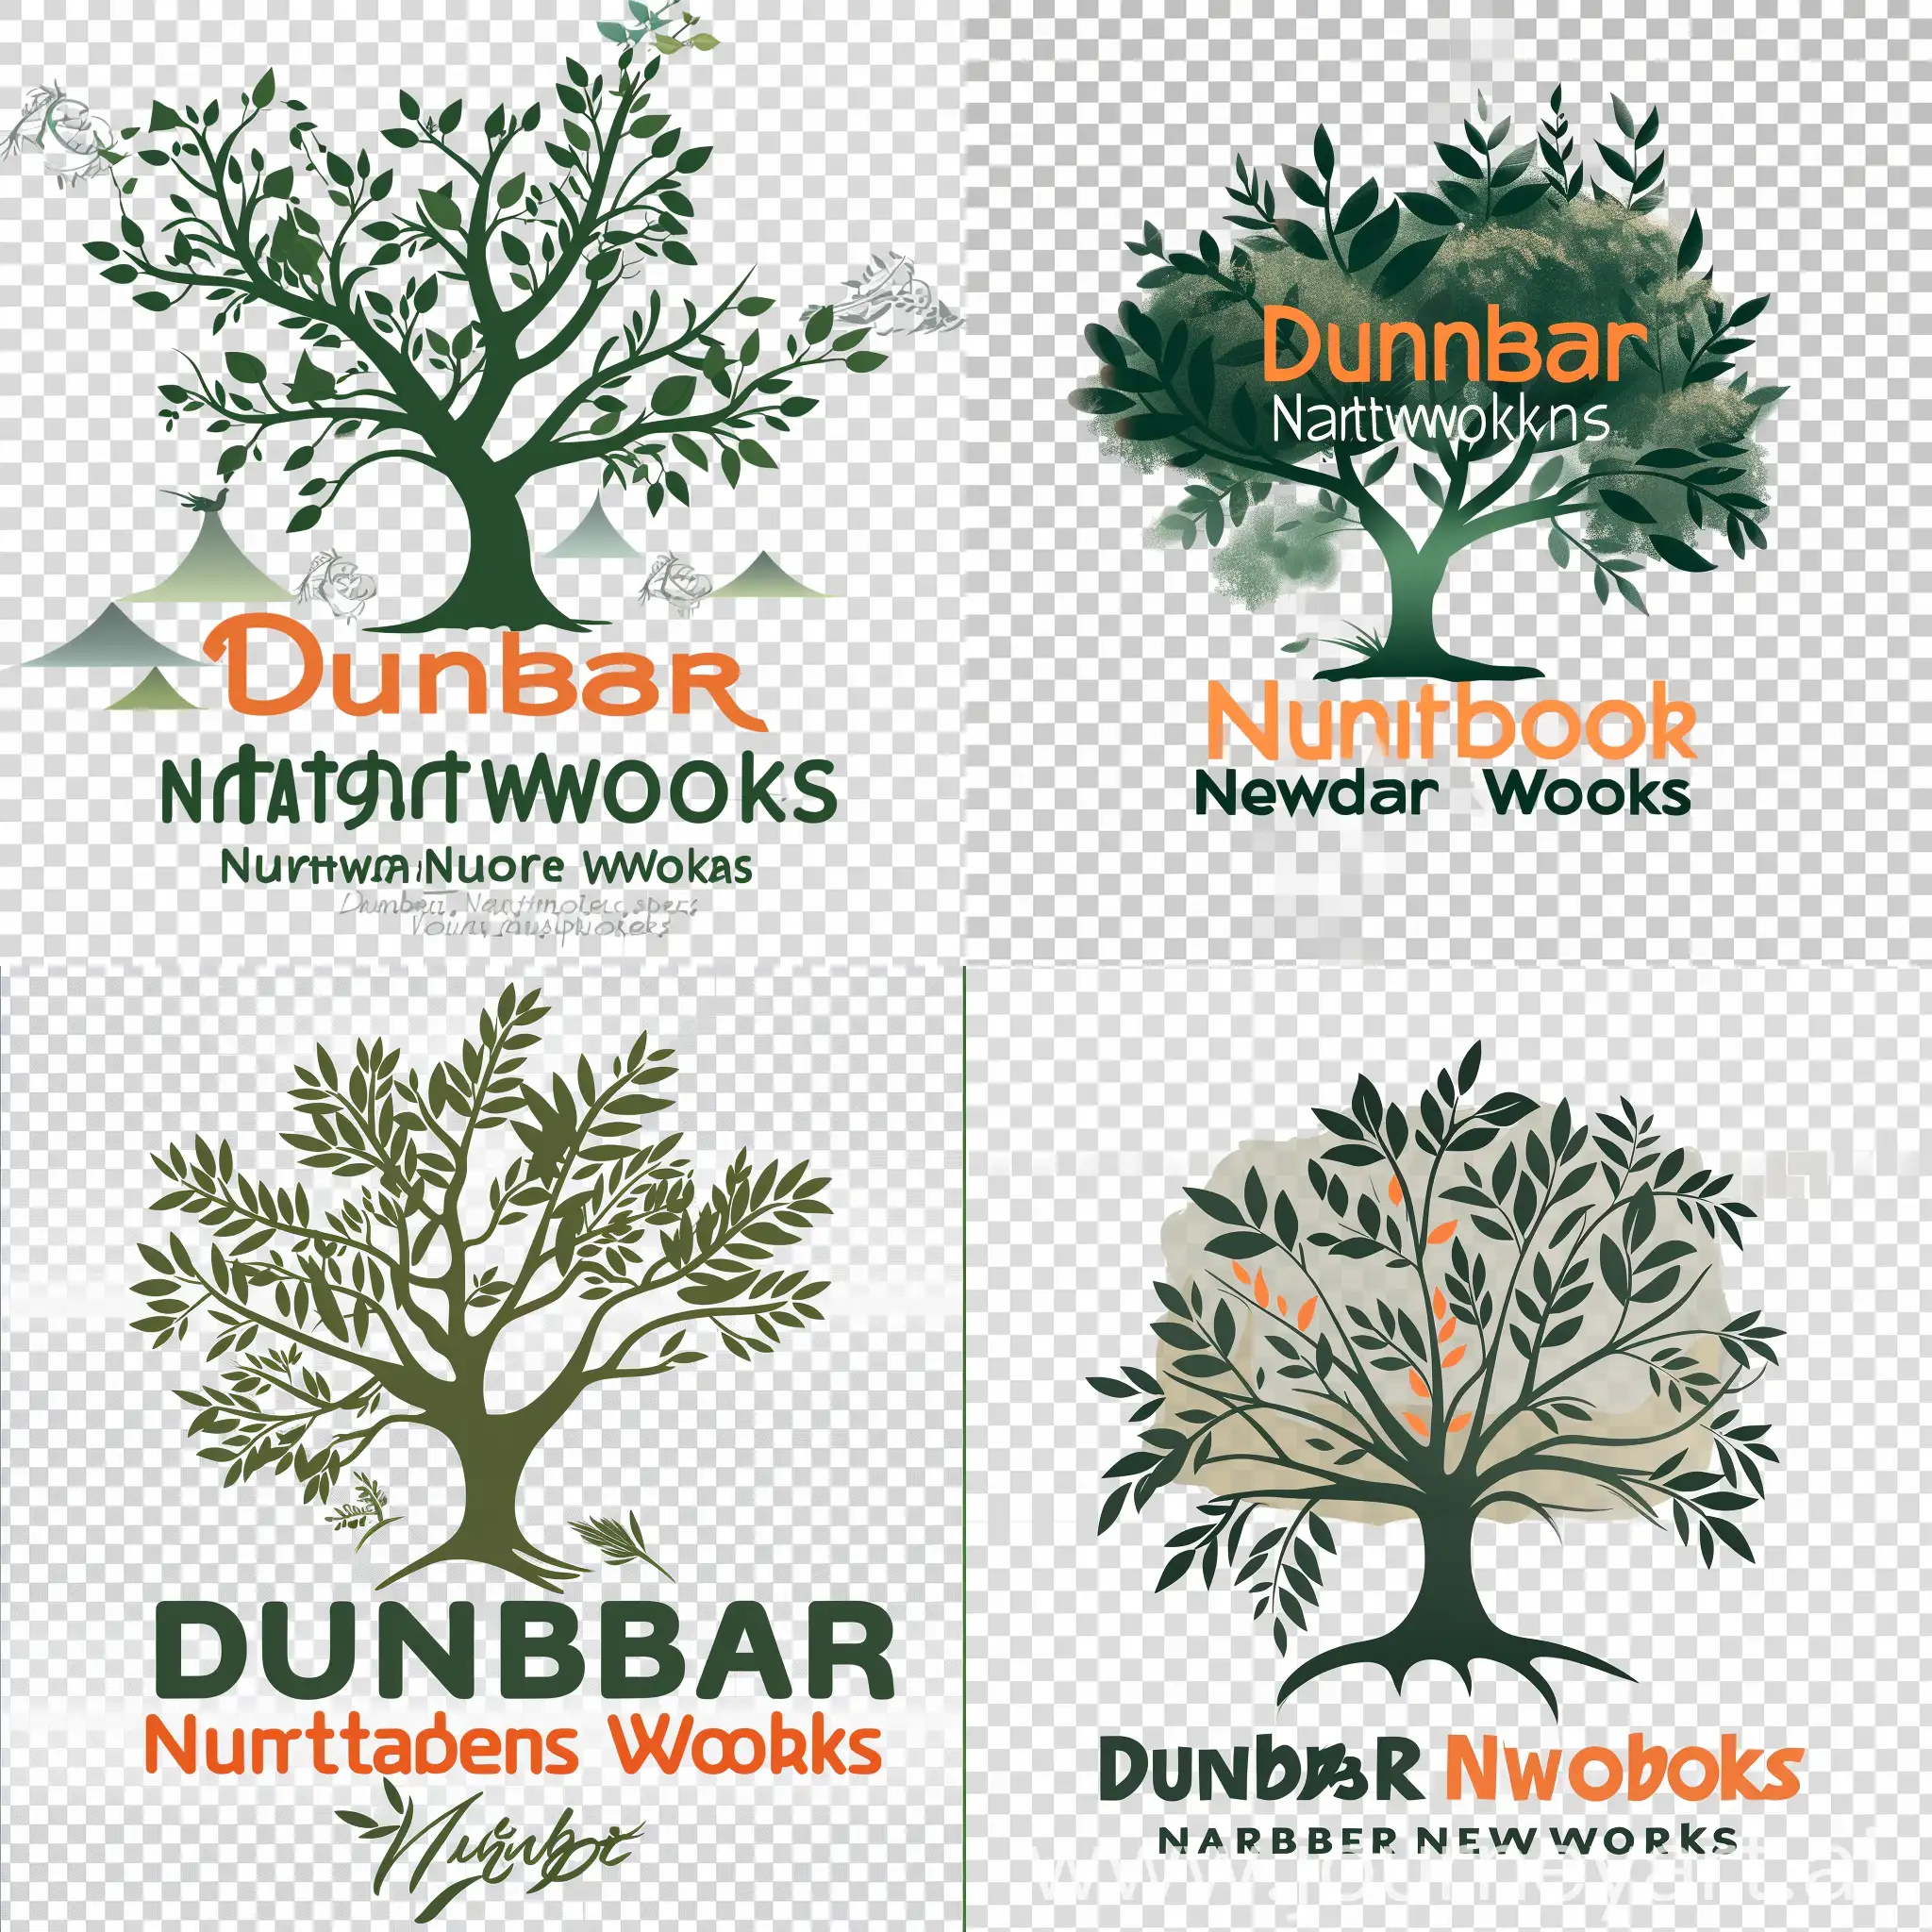 Dunbar-NatureWorks-Elegant-NatureInspired-Logo-Design-with-Lush-Foliage